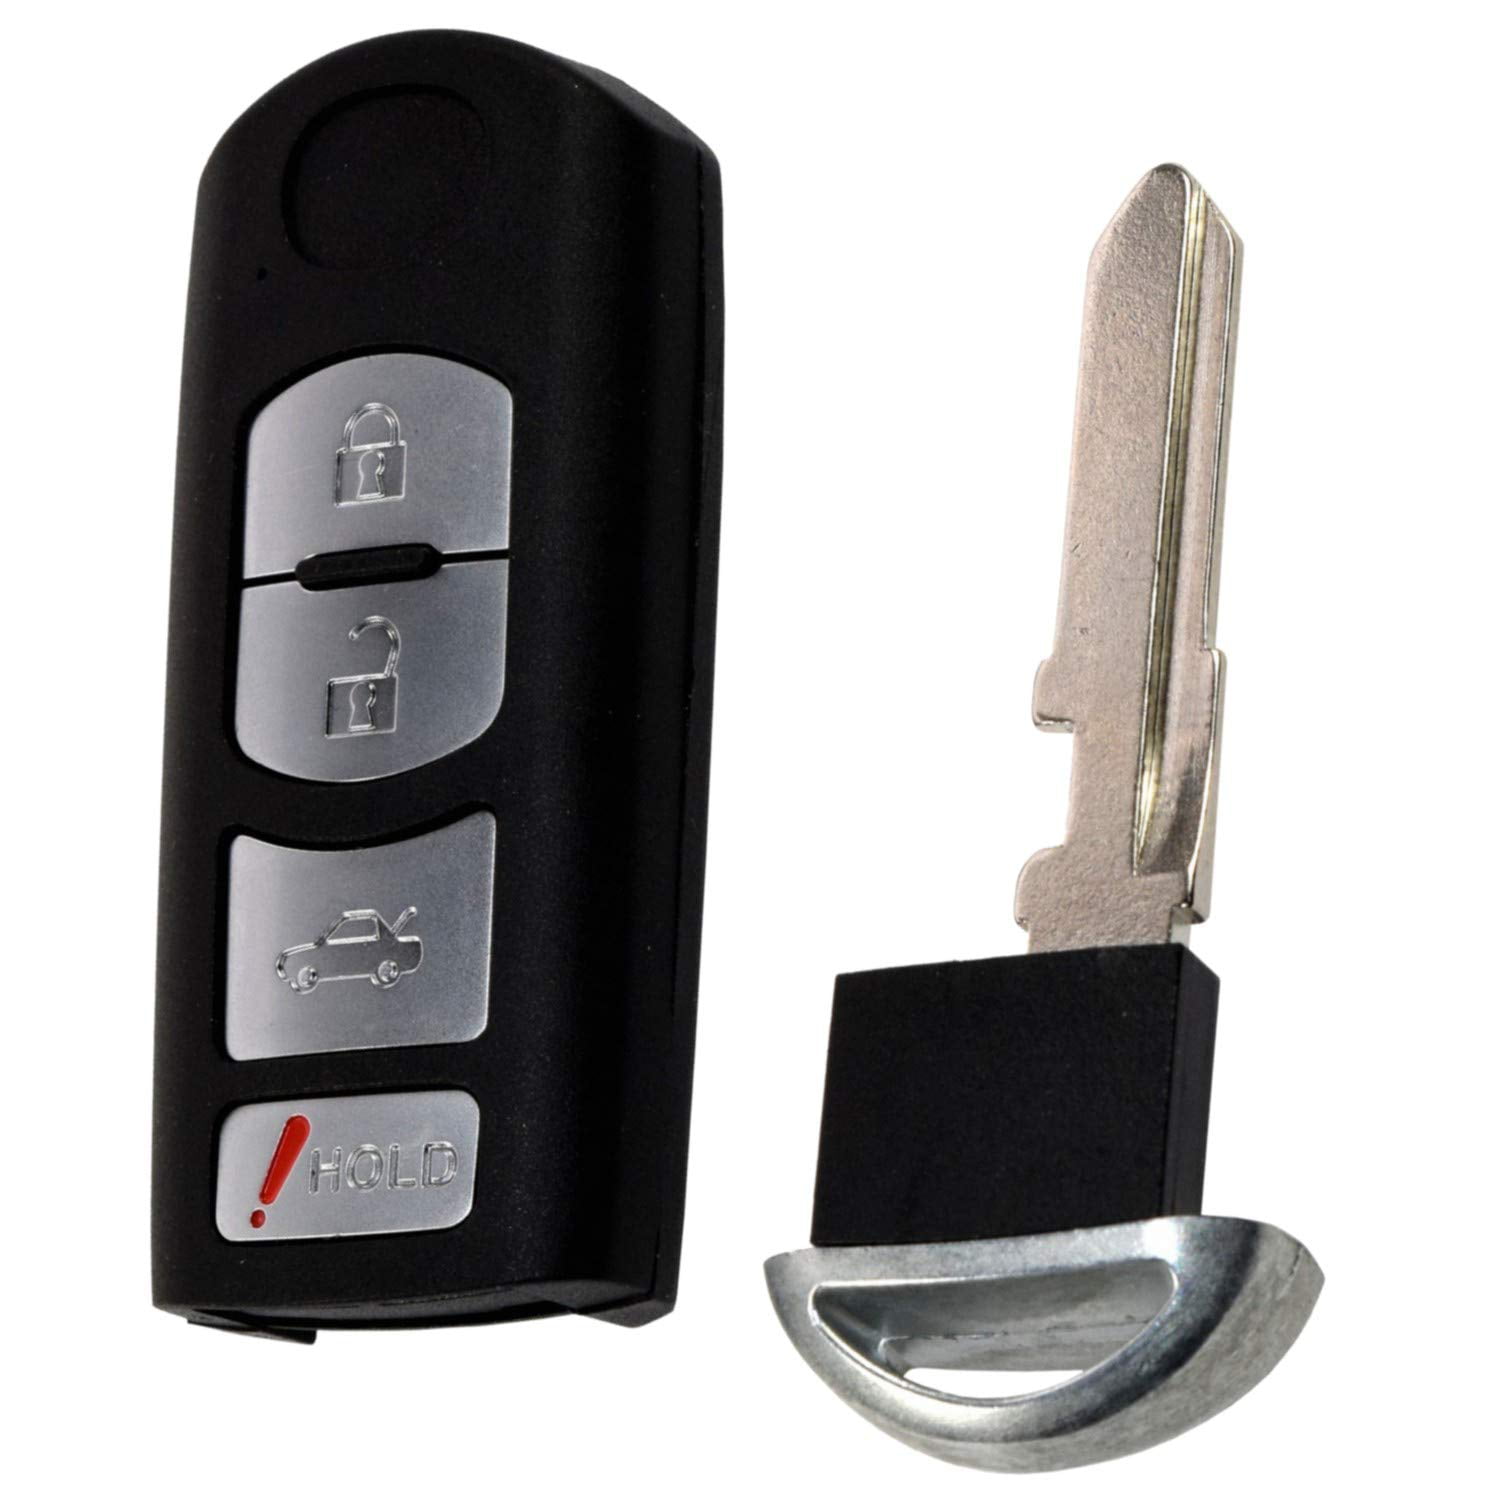 2x Car Transmitter Alarm Remote Key Fob Control for 2003 2004 2005 Mazda 6